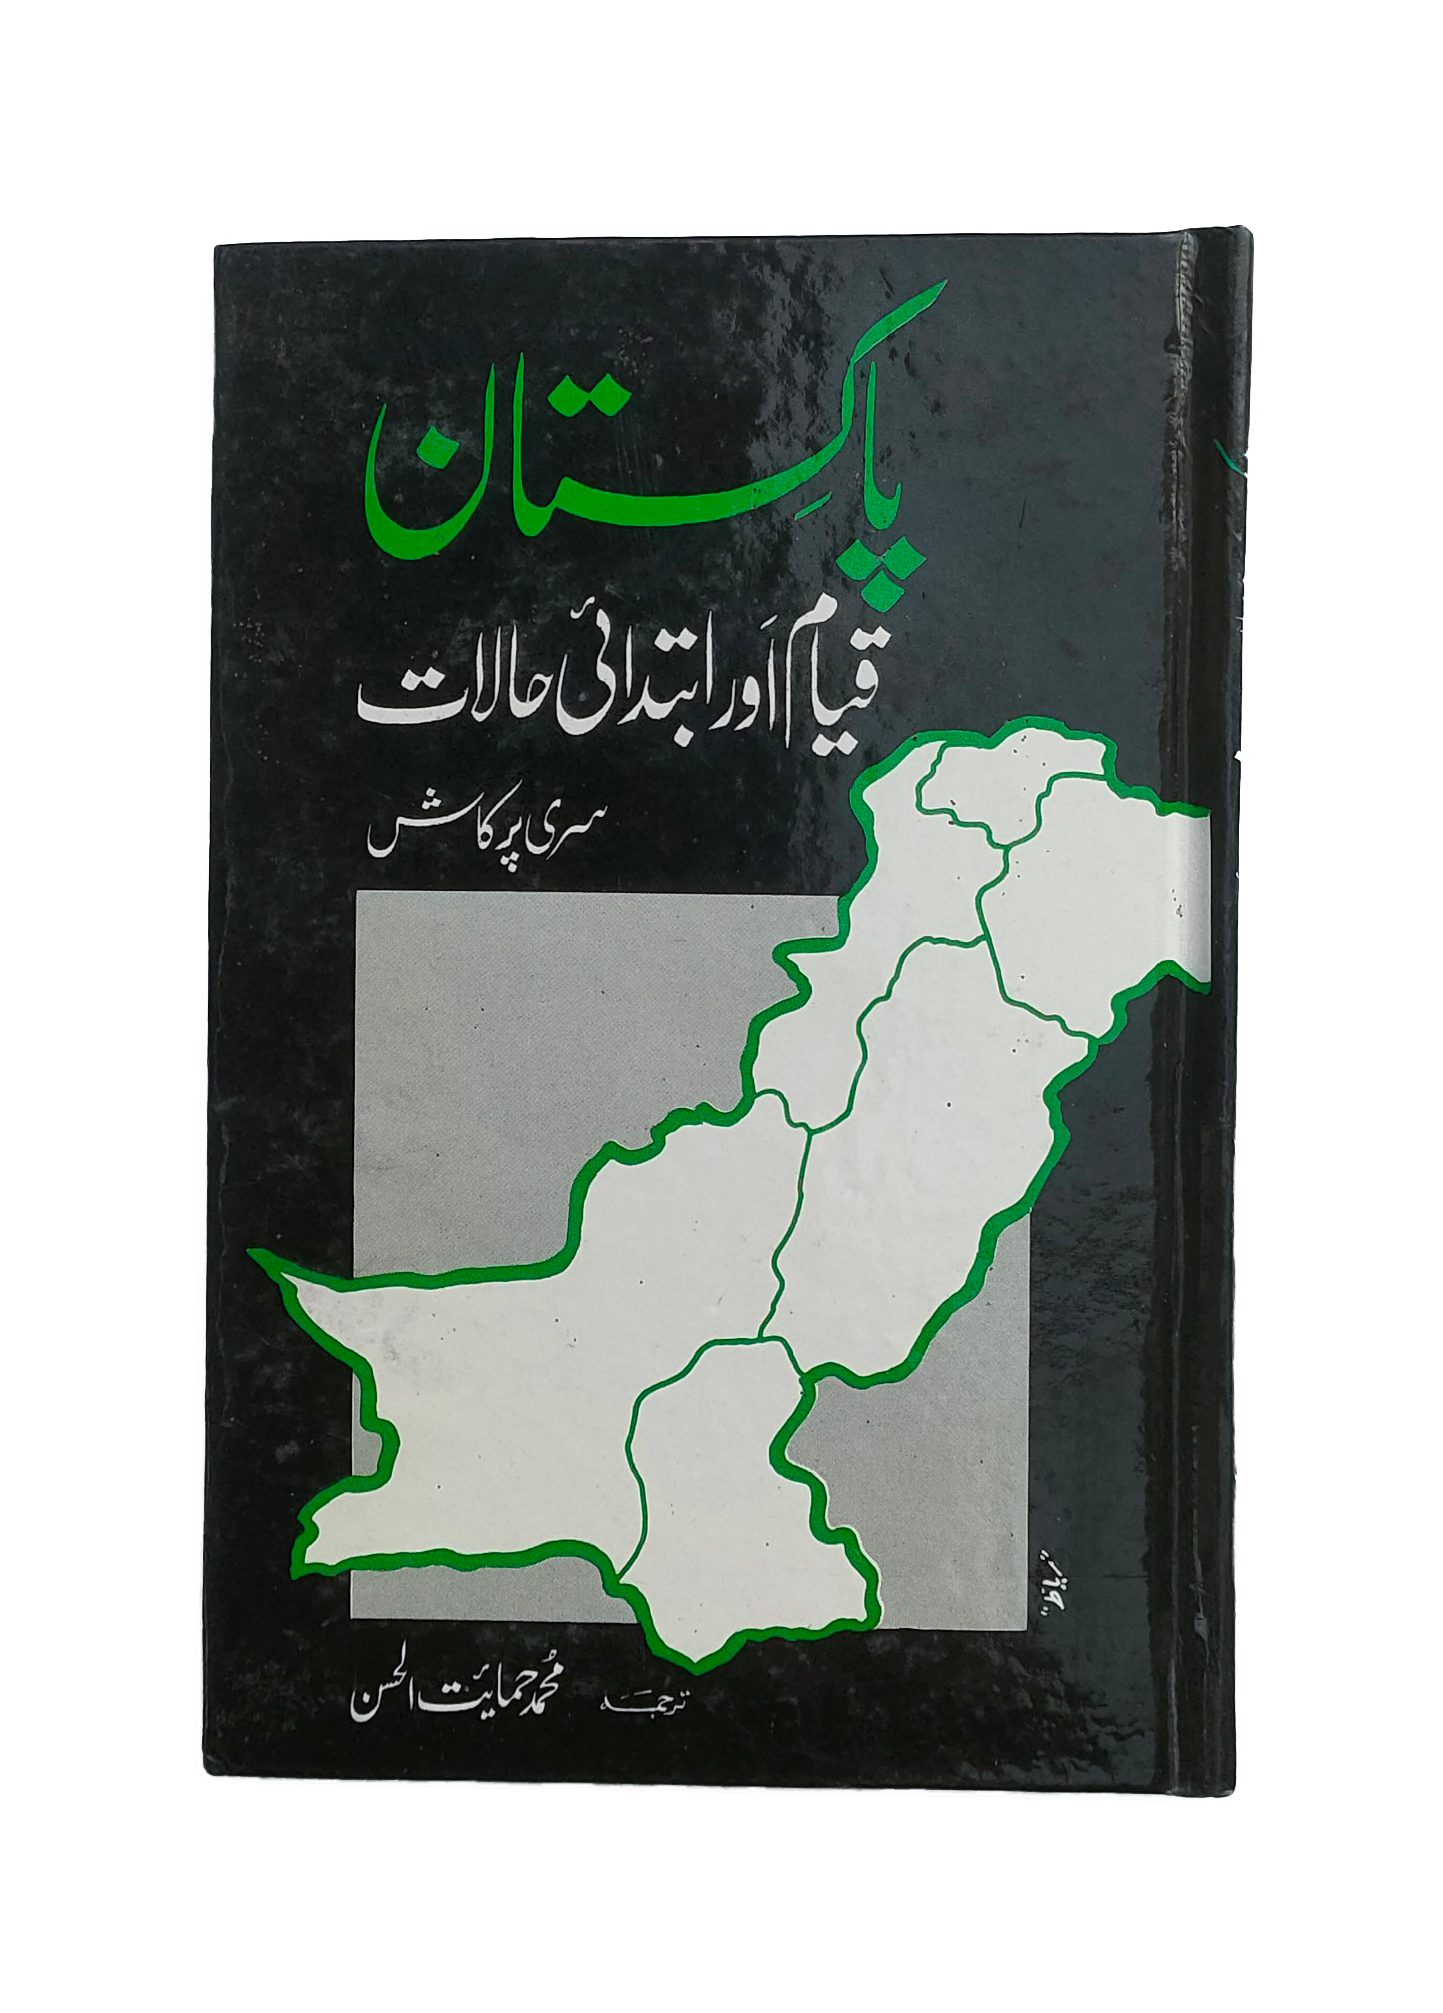 Pakistan Qayam Aur Ibtadai Halaat (The Establishment of Pakistan and Initial Conditions)